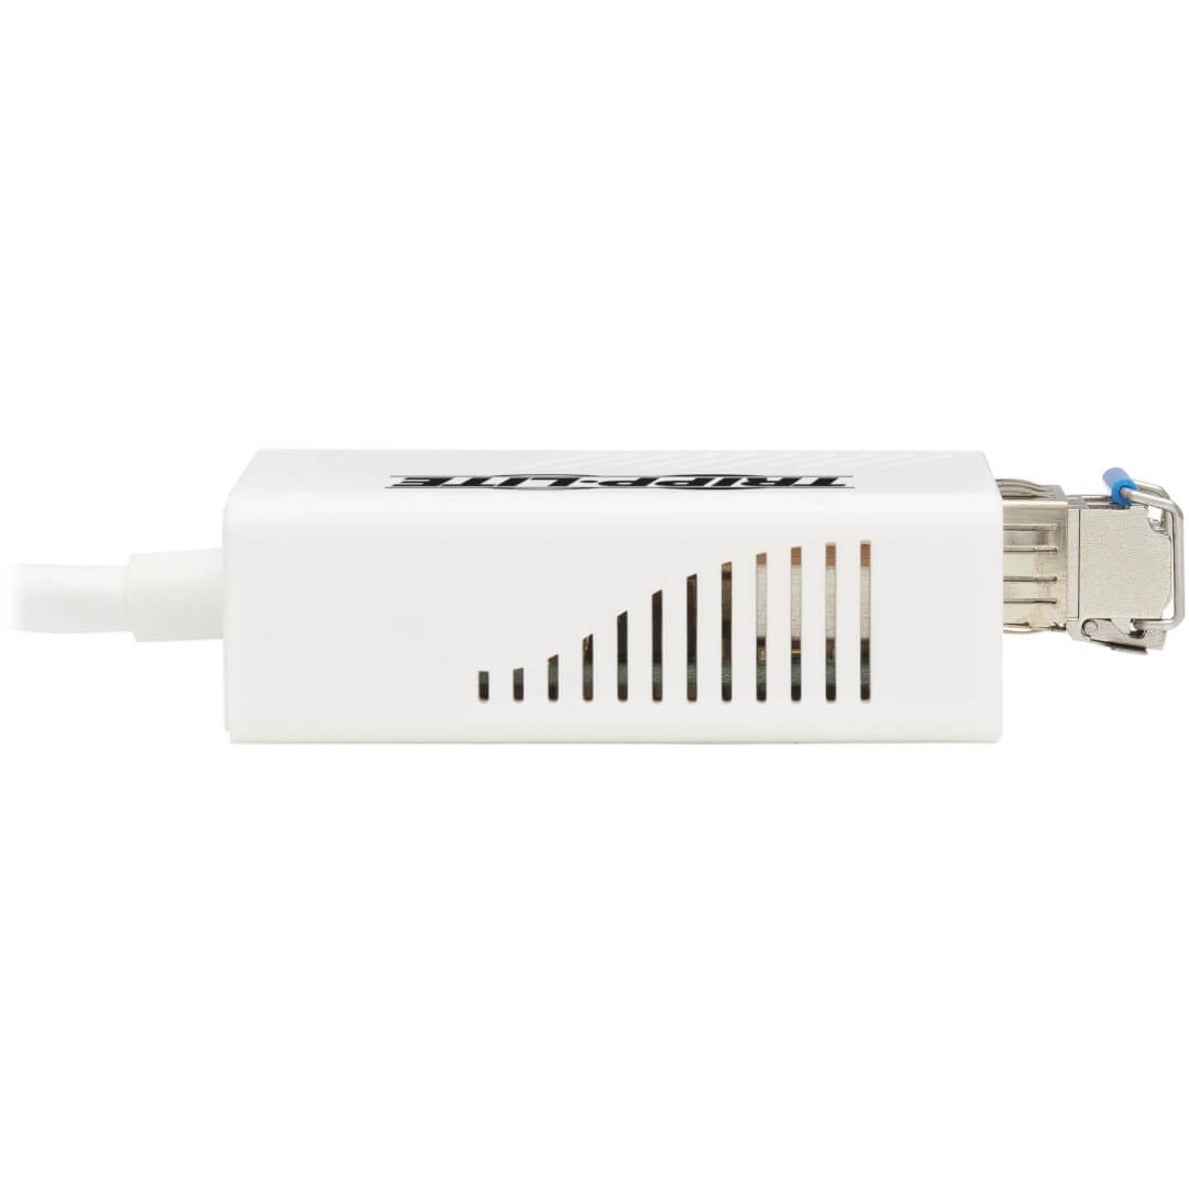 Tripp Lite U236-MMF-LC USB 2.0 ETHERNET NIC Adapter, Fast Ethernet Card, LC MMF